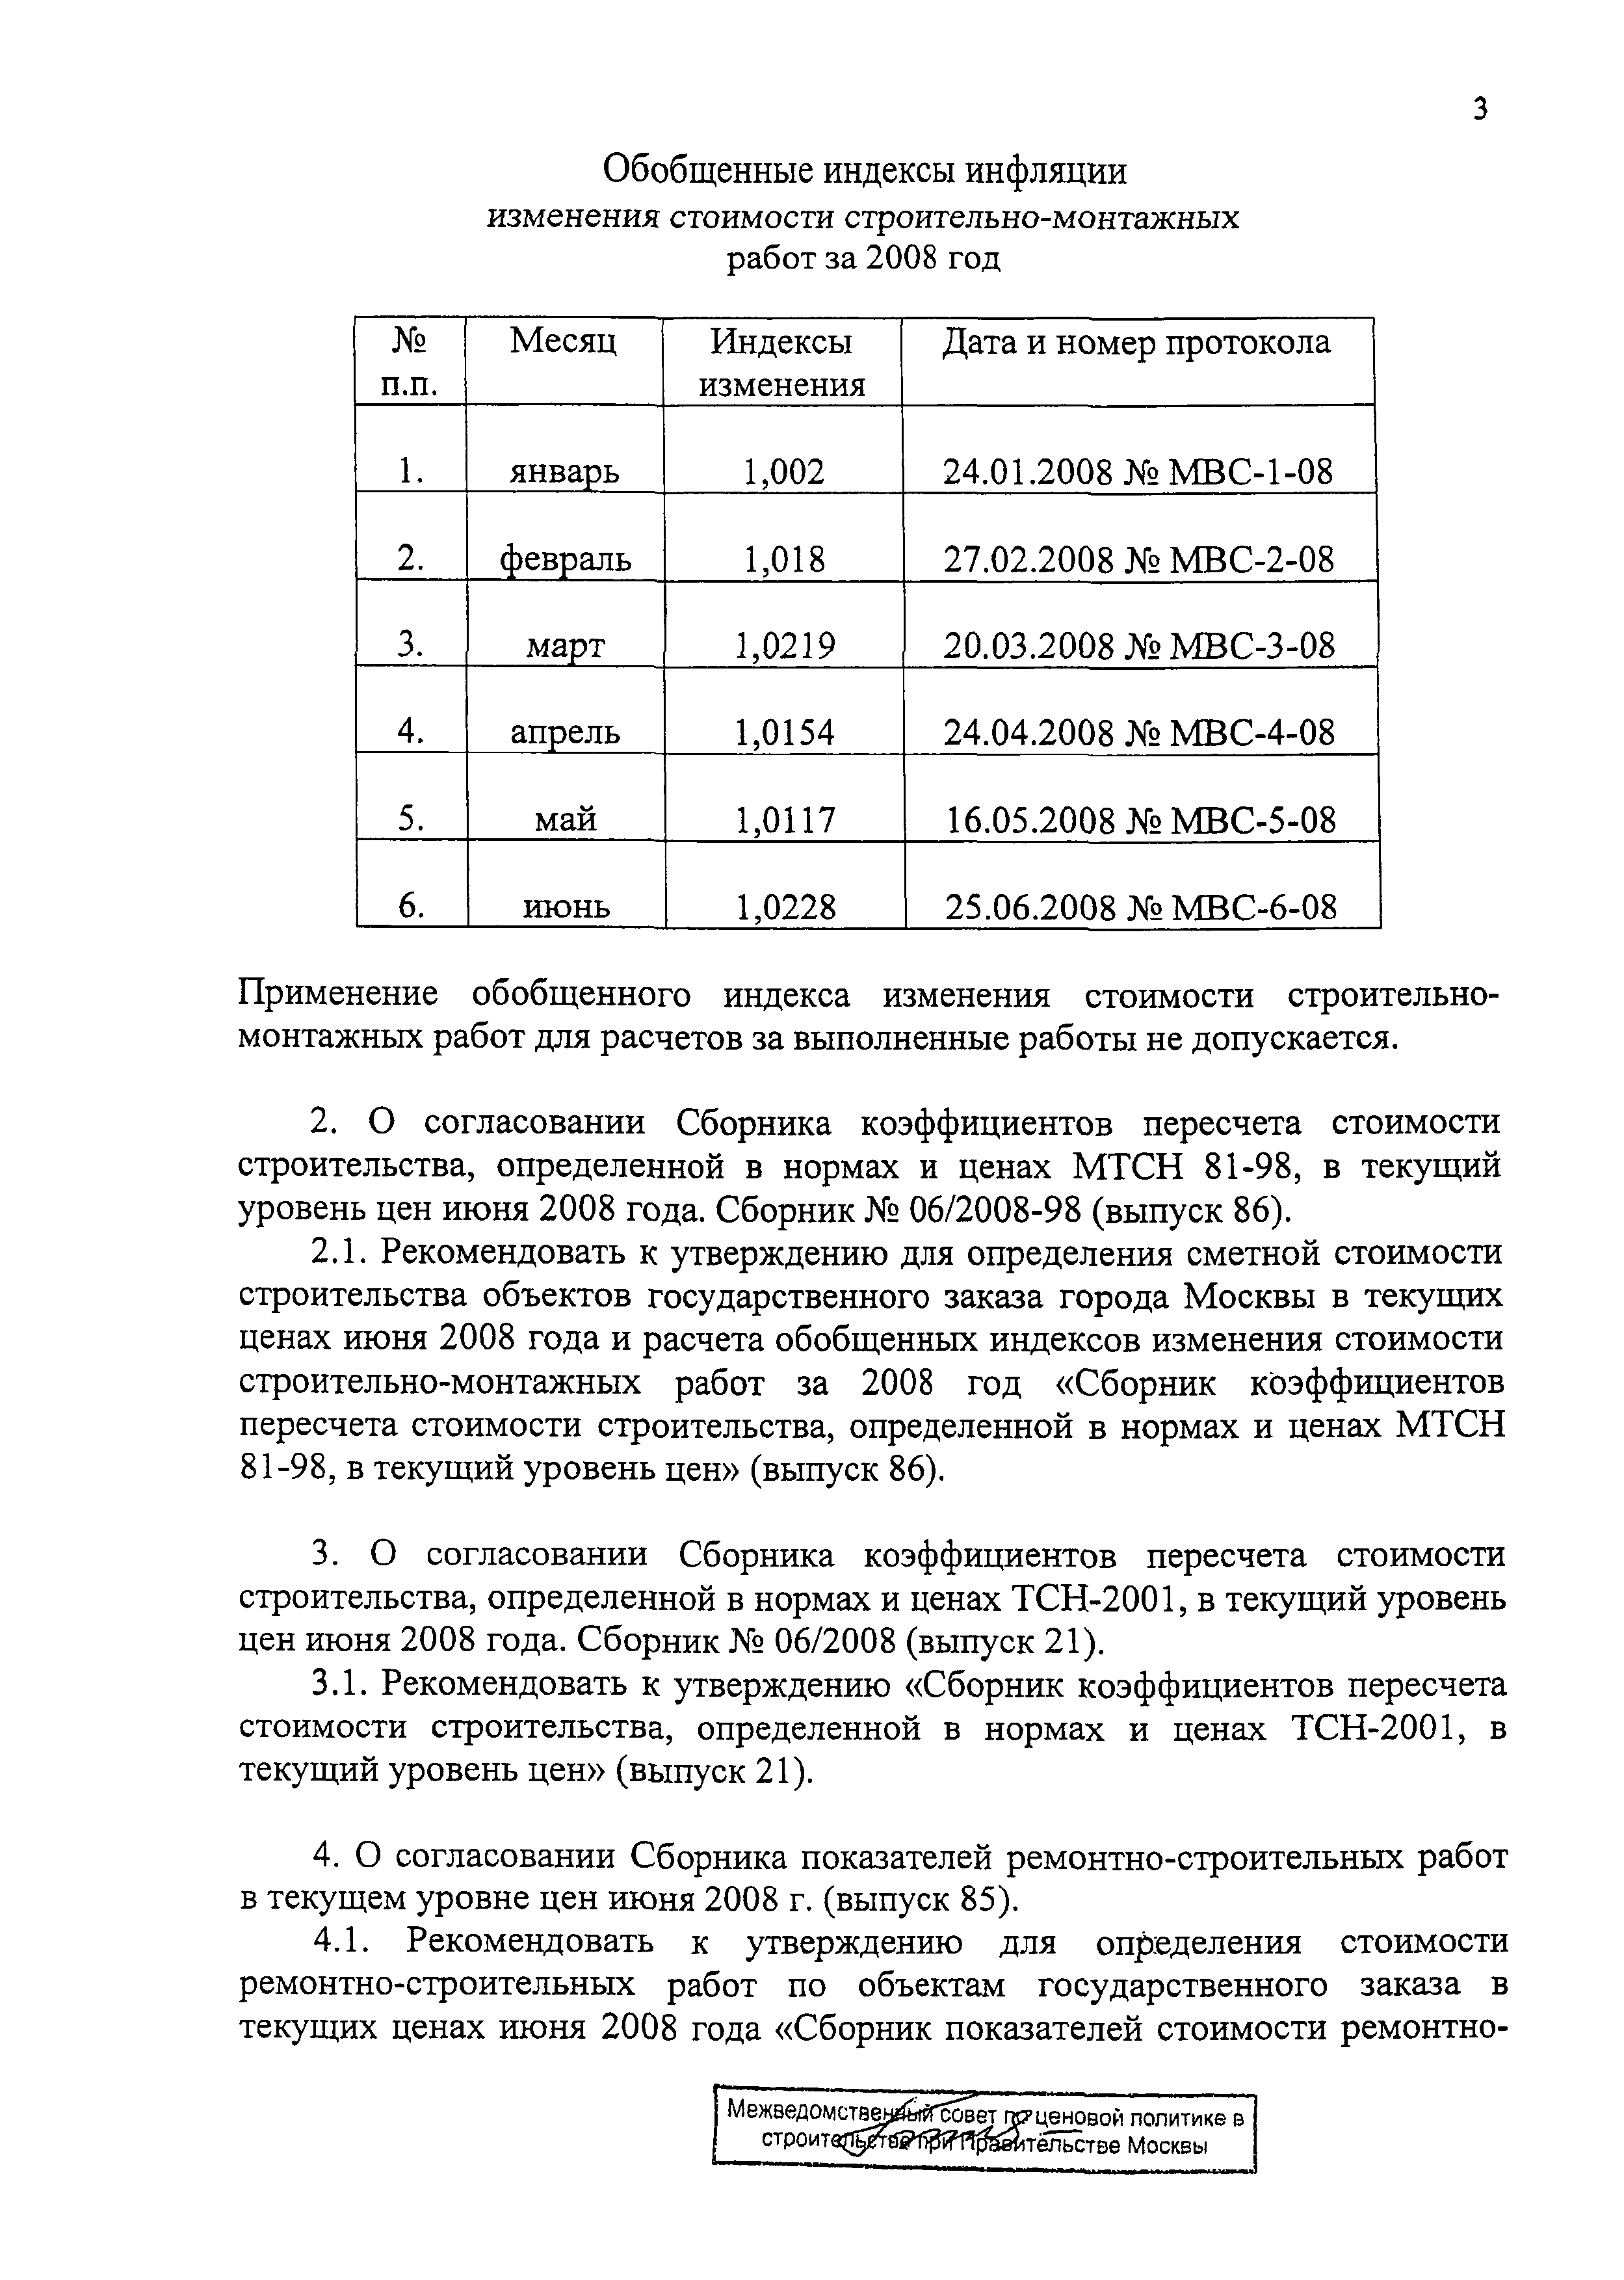 Протокол МВС-6-08